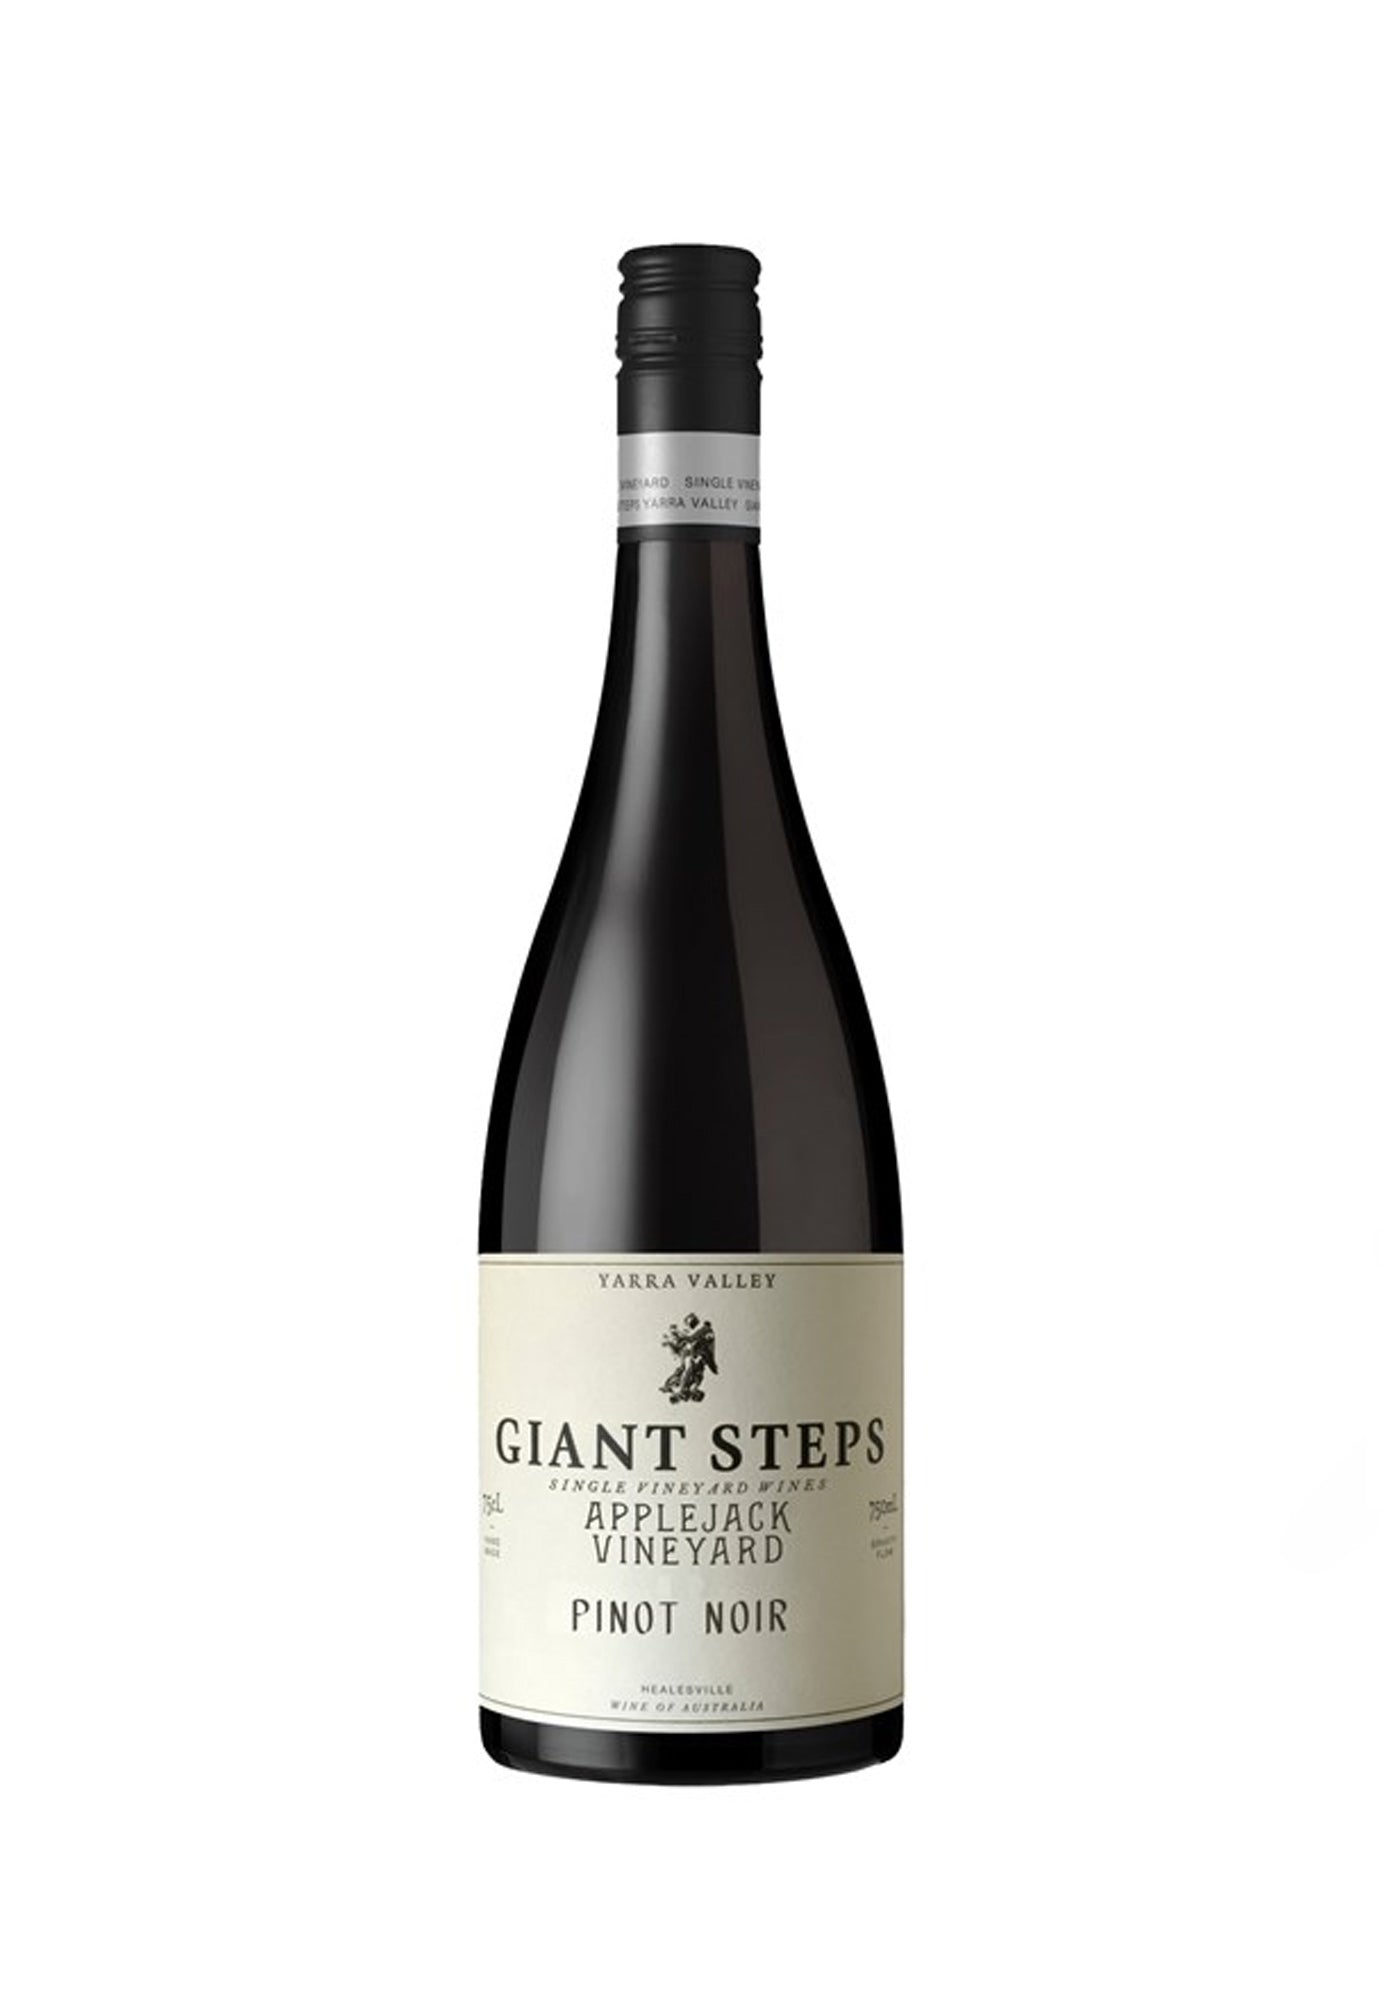 Giant Steps Pinot Noir Applejack Vineyard 2019